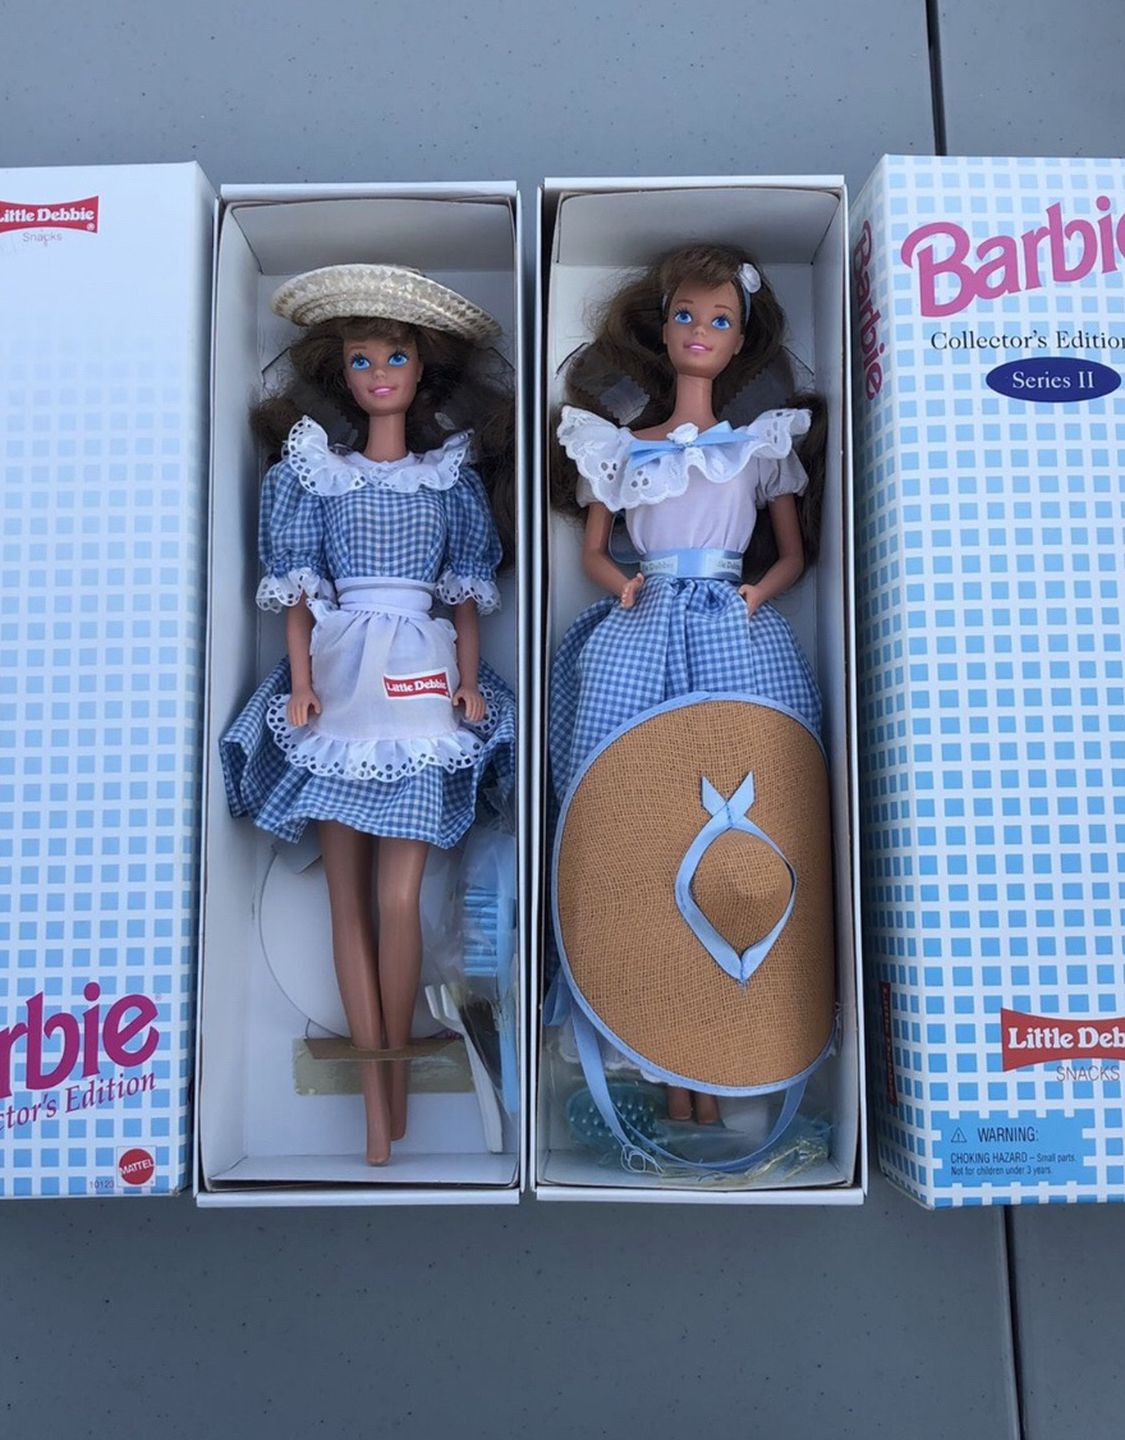 Vintage Barbie Little Debbie exclusive 1992 and 1995 Series 1 & 2 dolls.